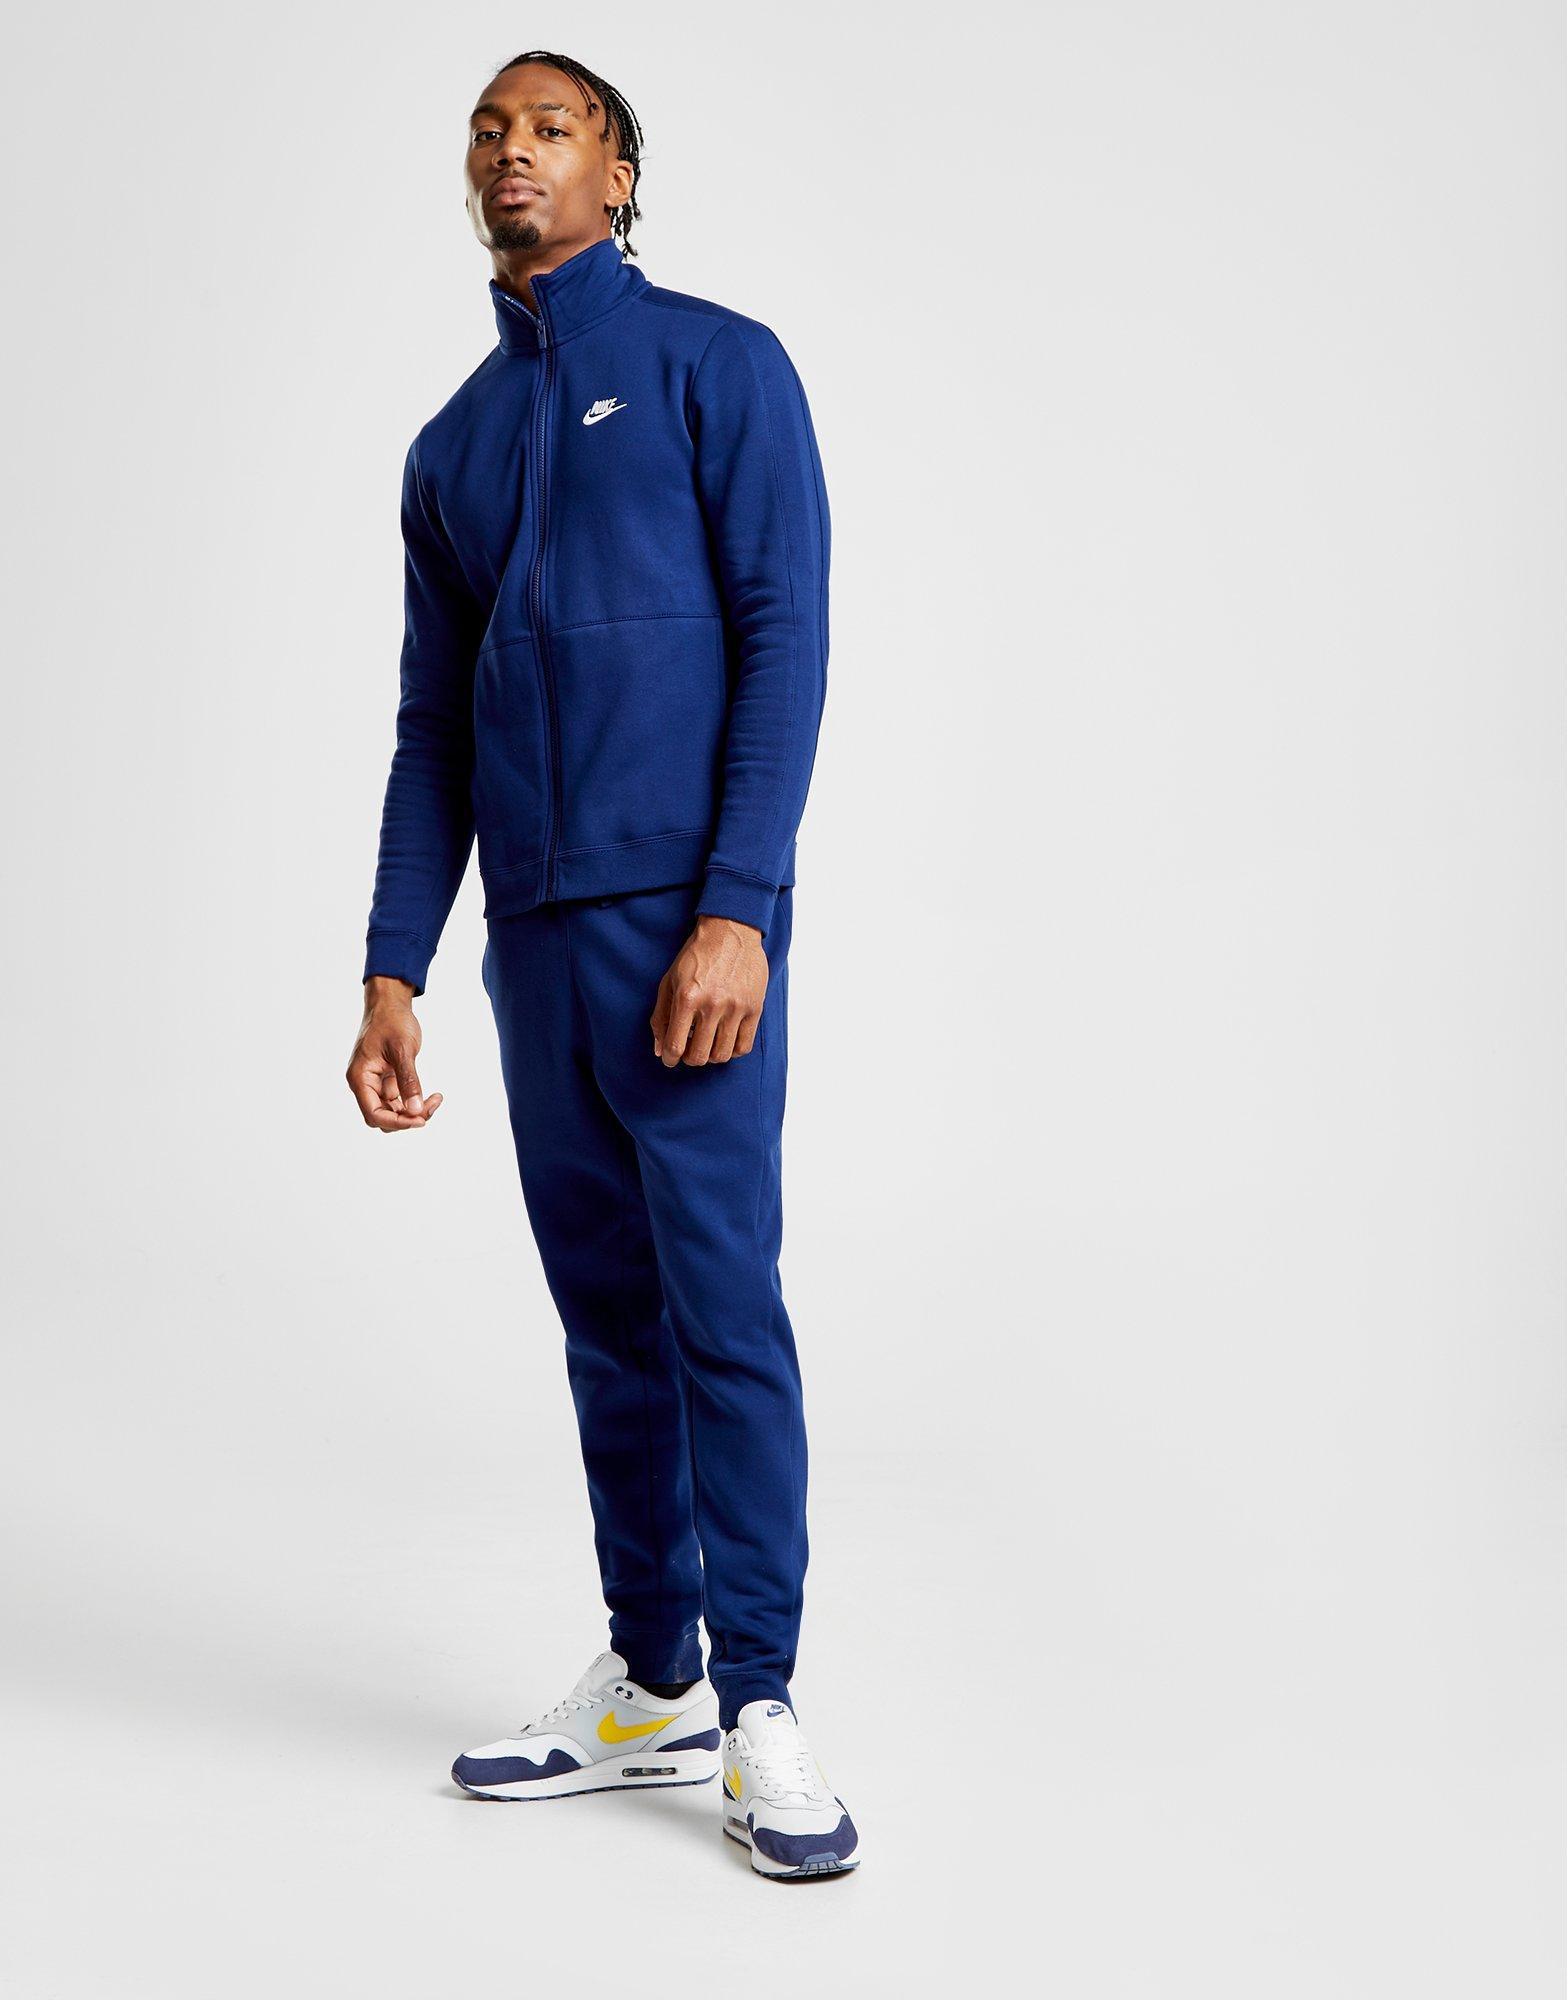 Blue Nike Fleece Tracksuit Hotsell, SAVE 38% - eagleflair.com